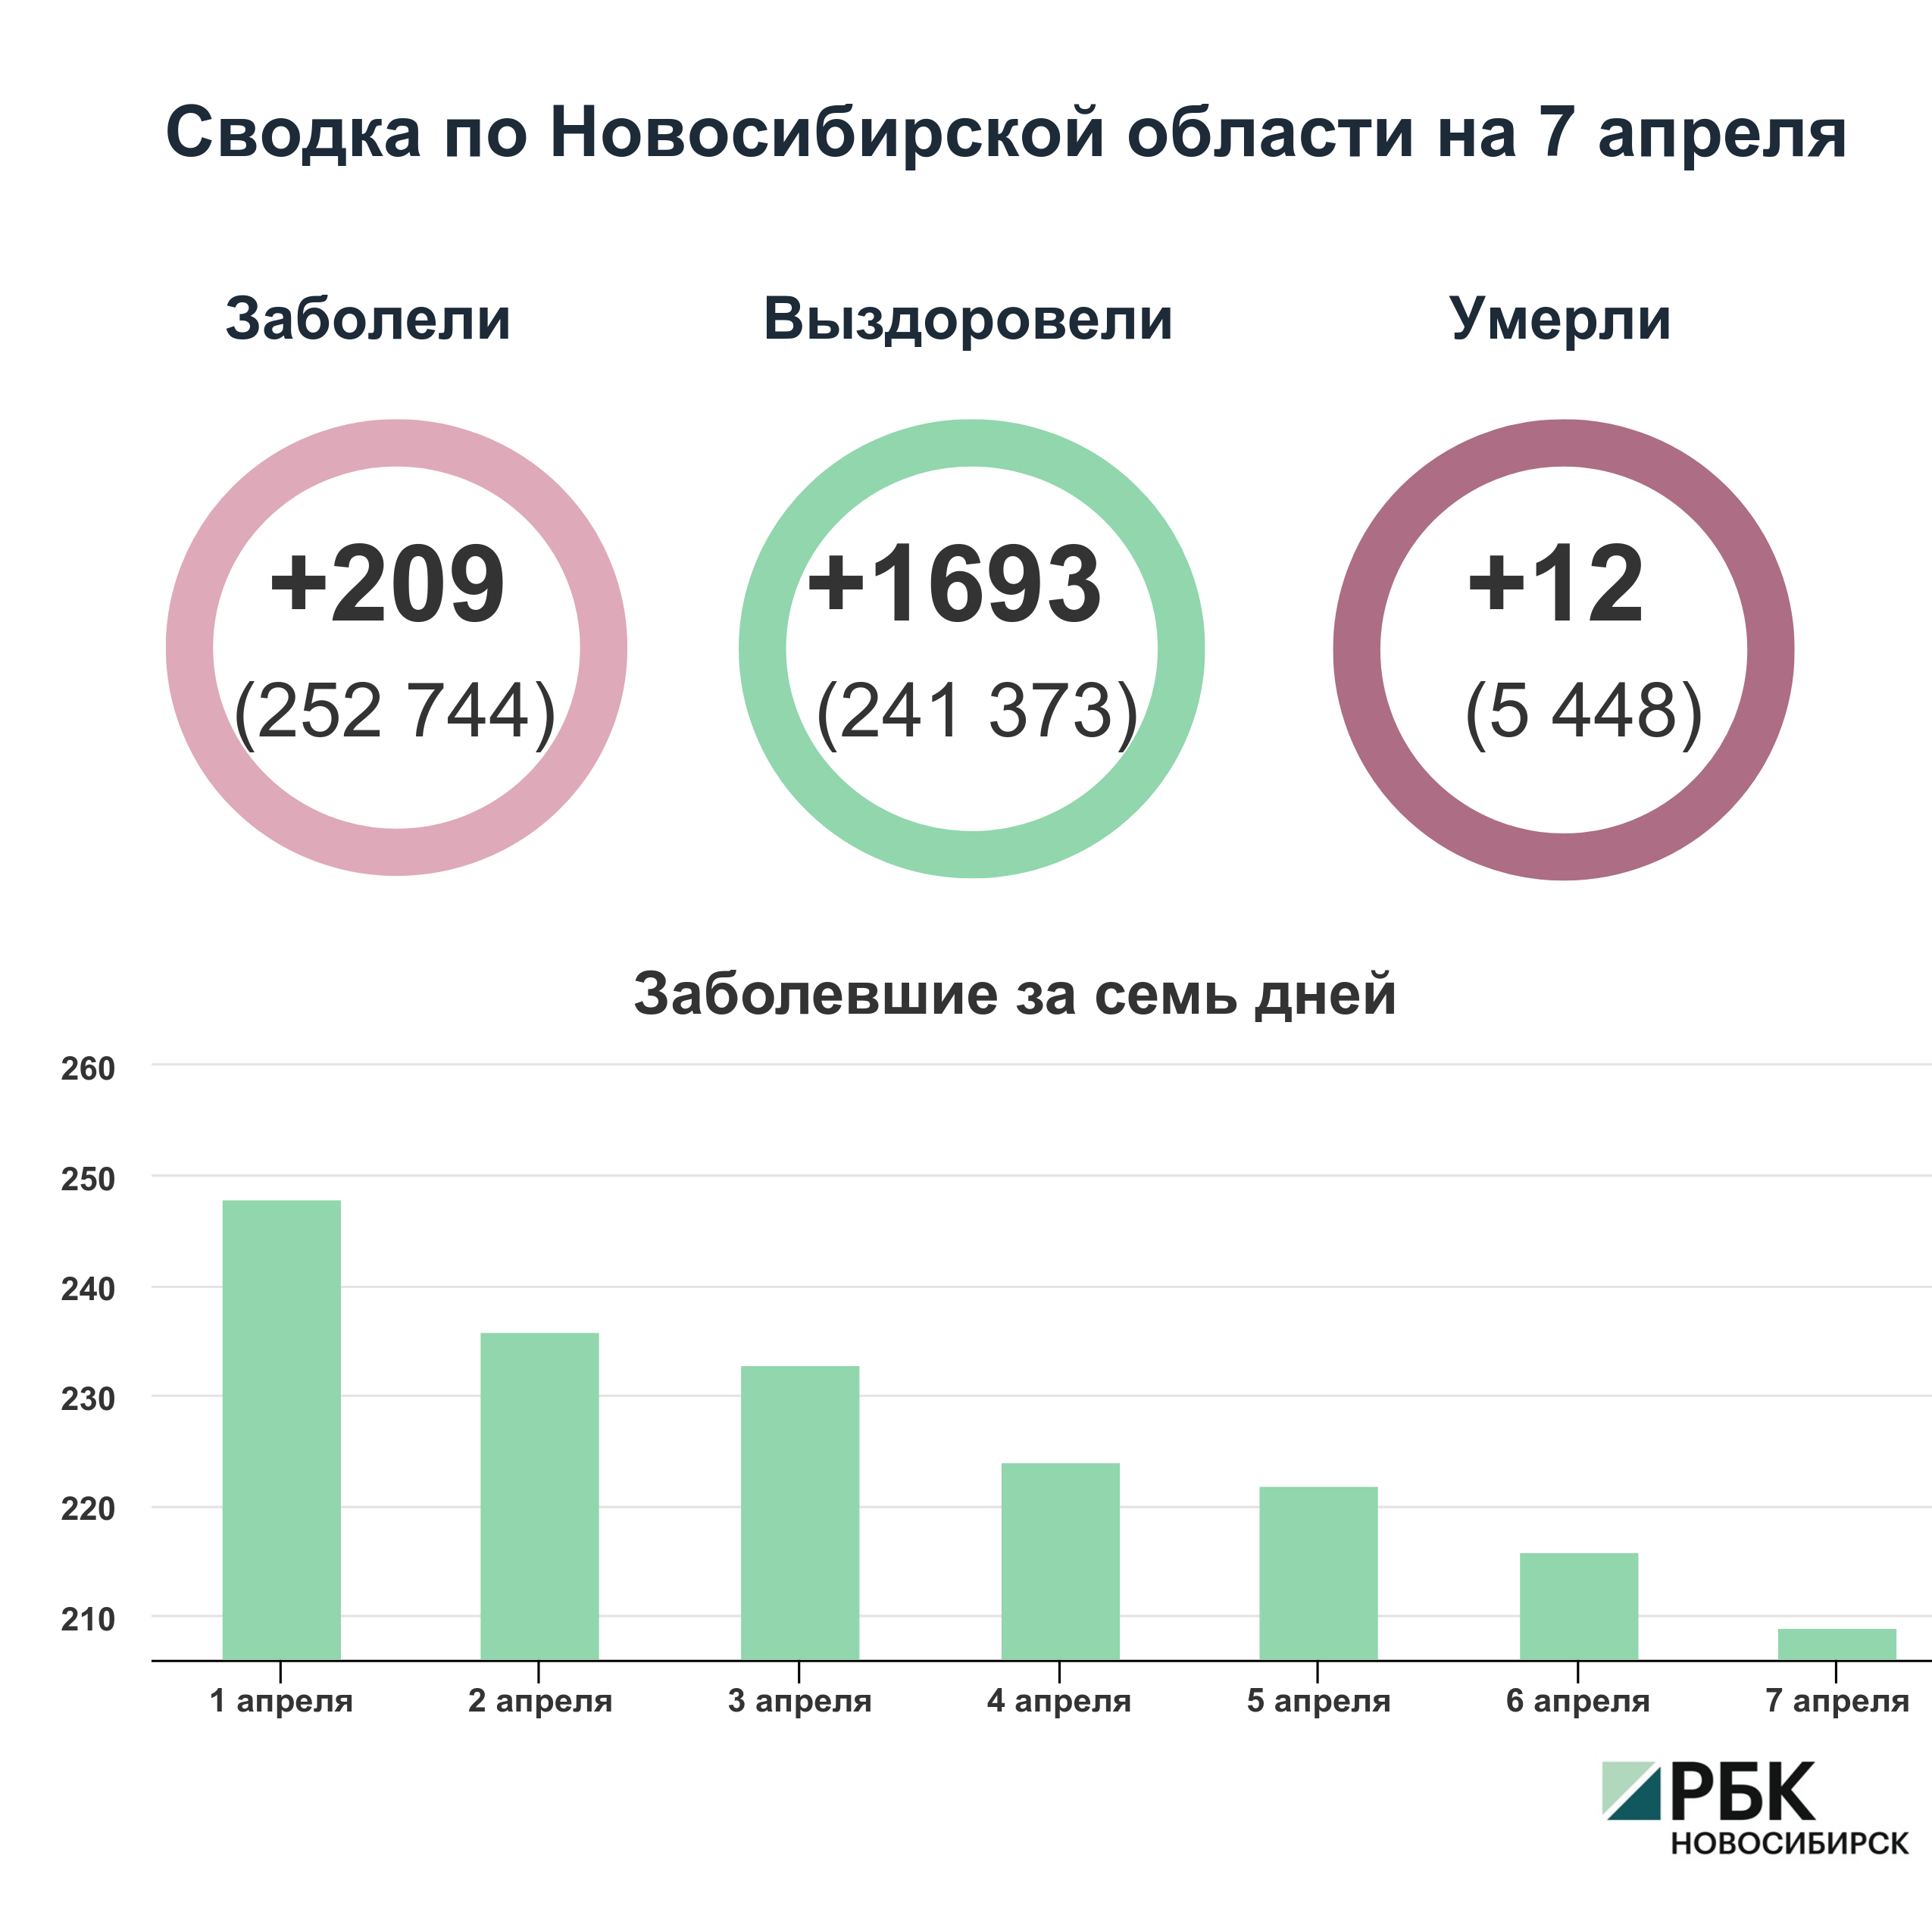 Коронавирус в Новосибирске: сводка на 7 апреля